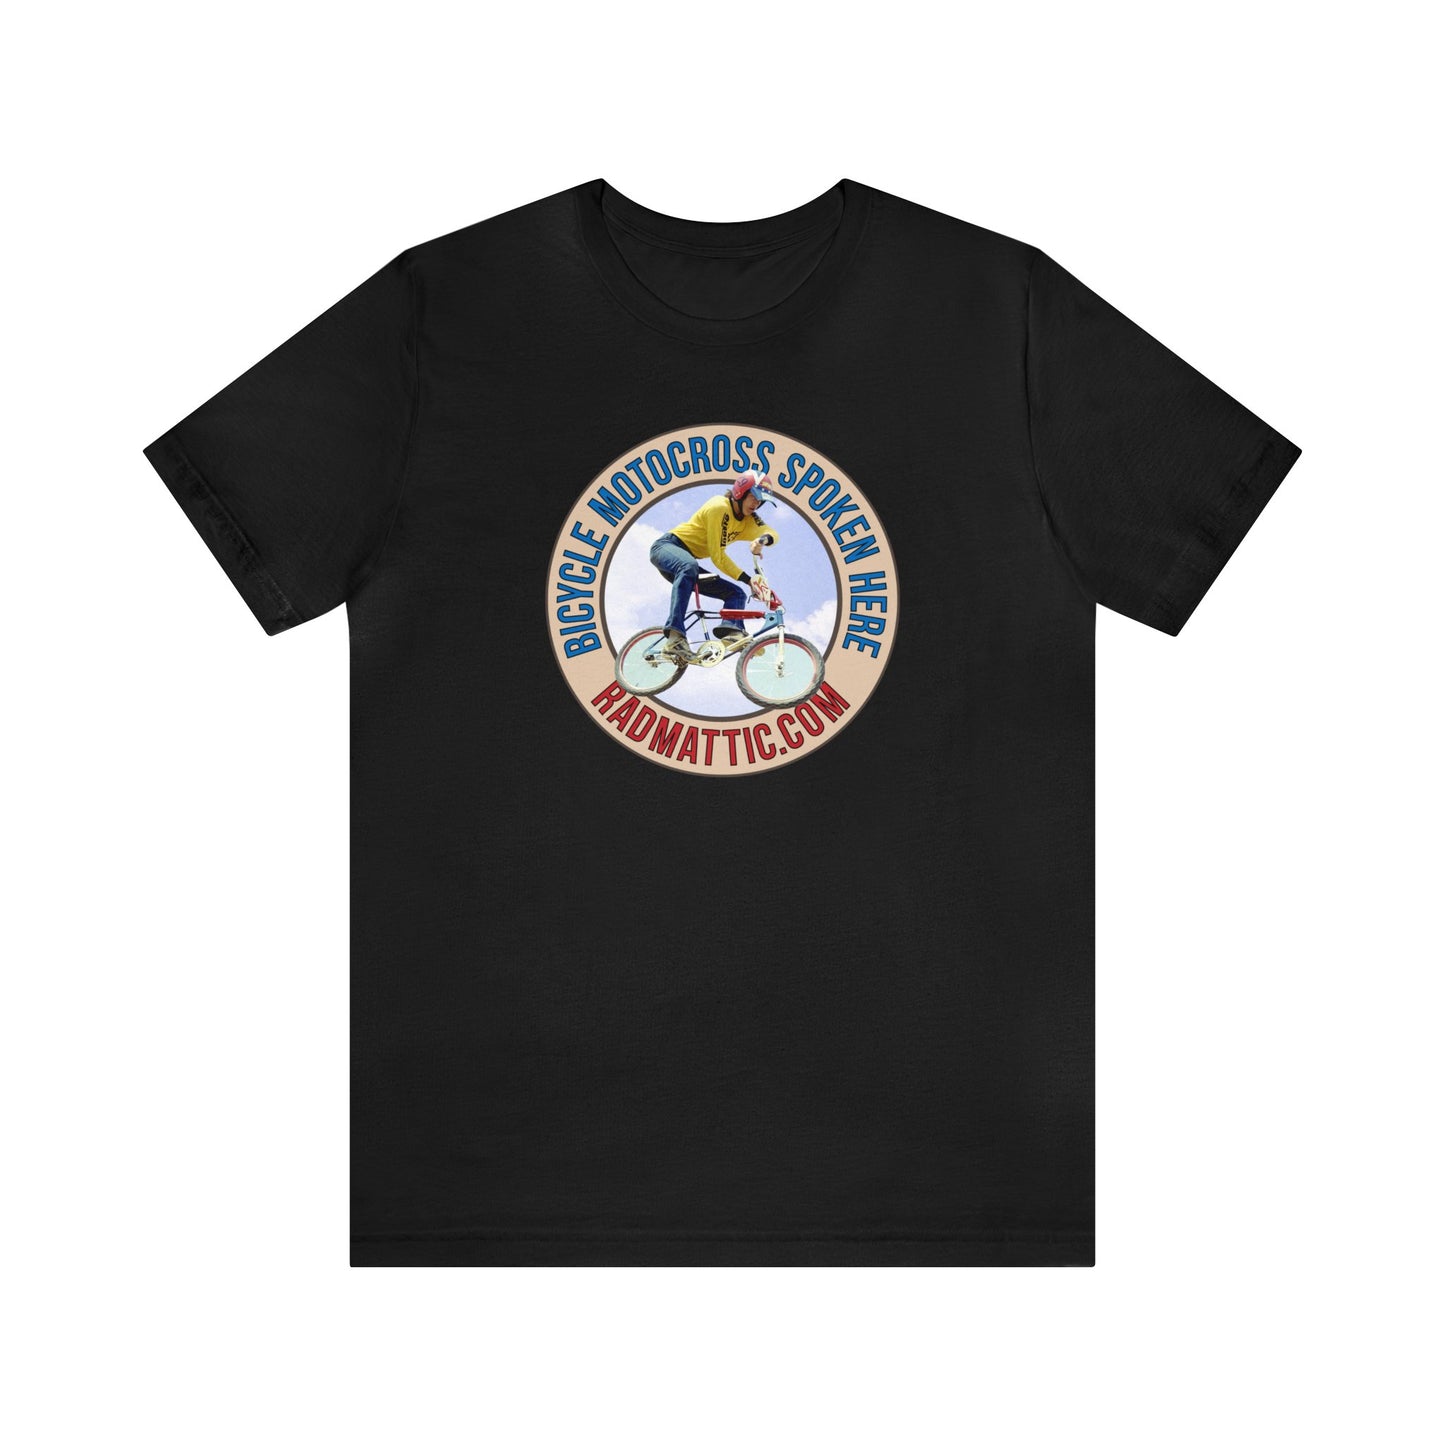 Bicycle Motocross Spoken Here Vintage BMX T-Shirt | BMX T-Shirts | BMX Shirts